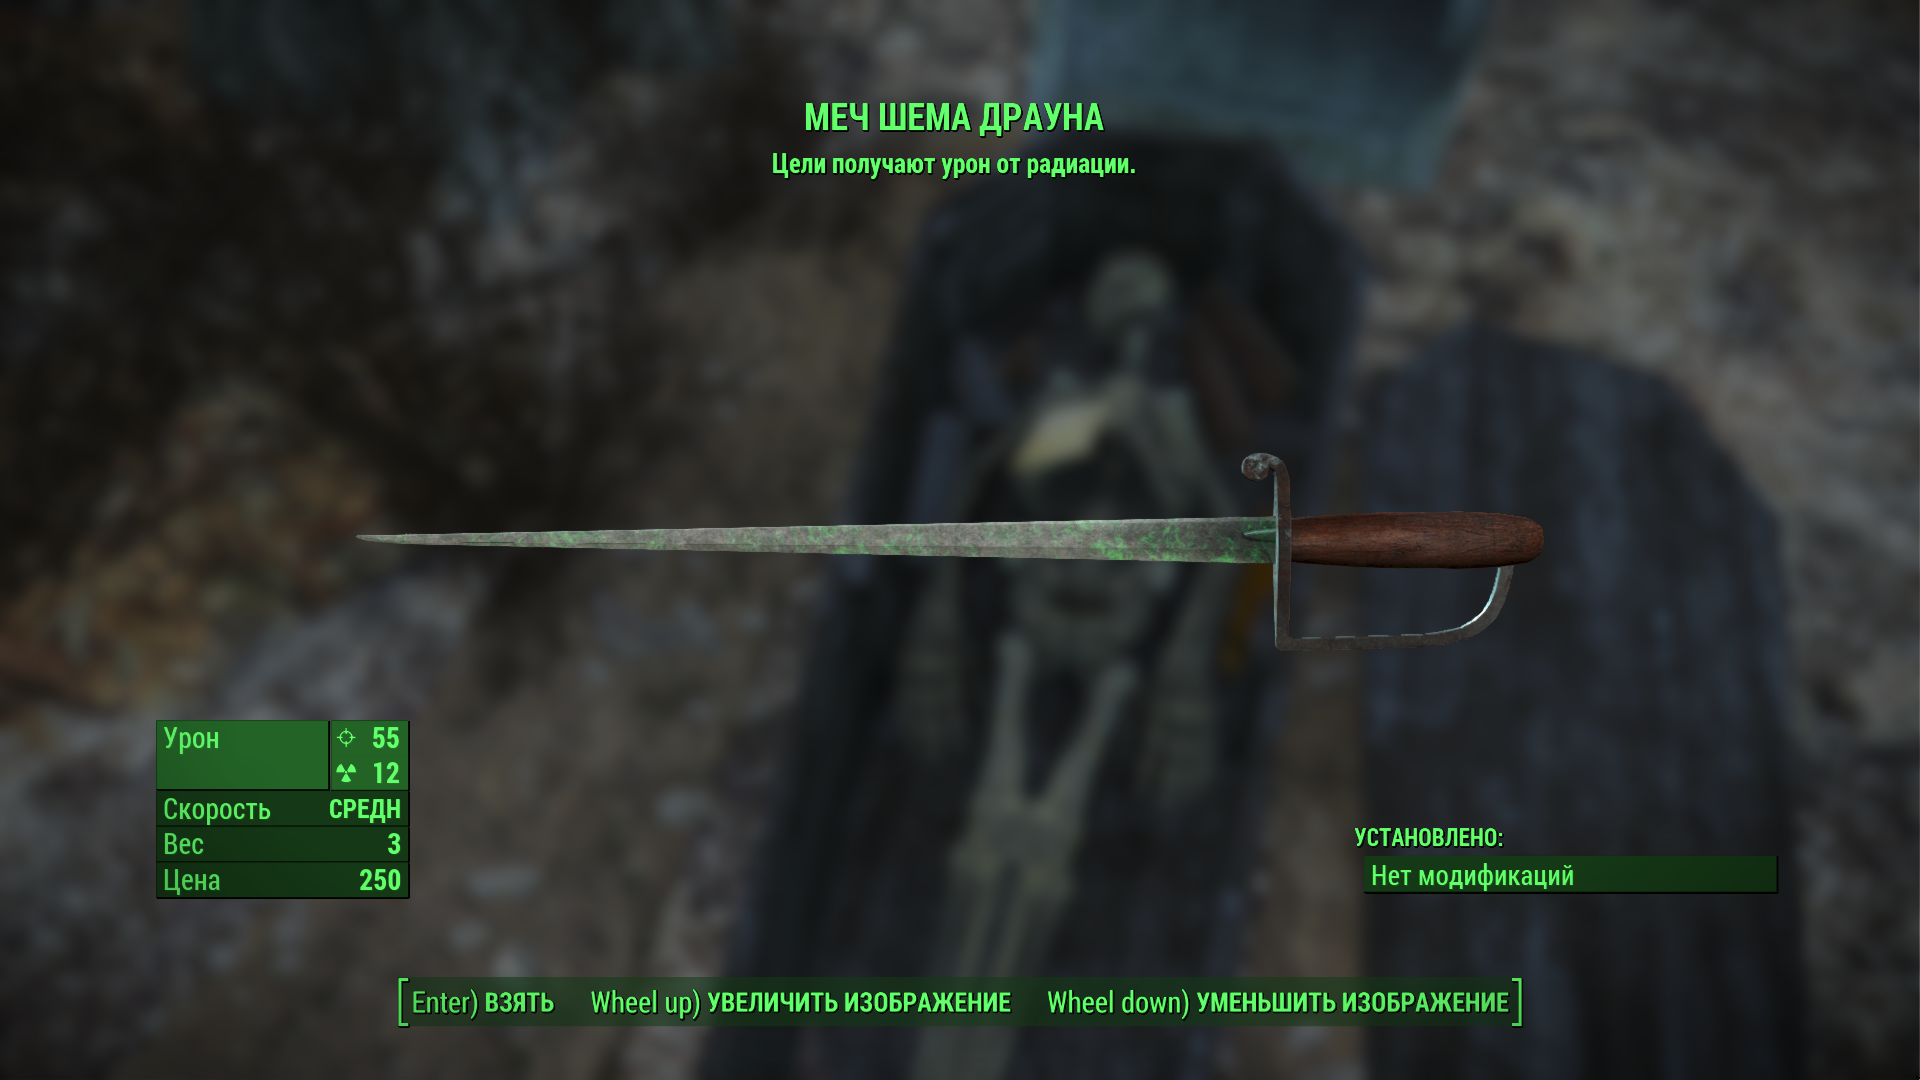 Fallout 4 меч шема драуна фото 4